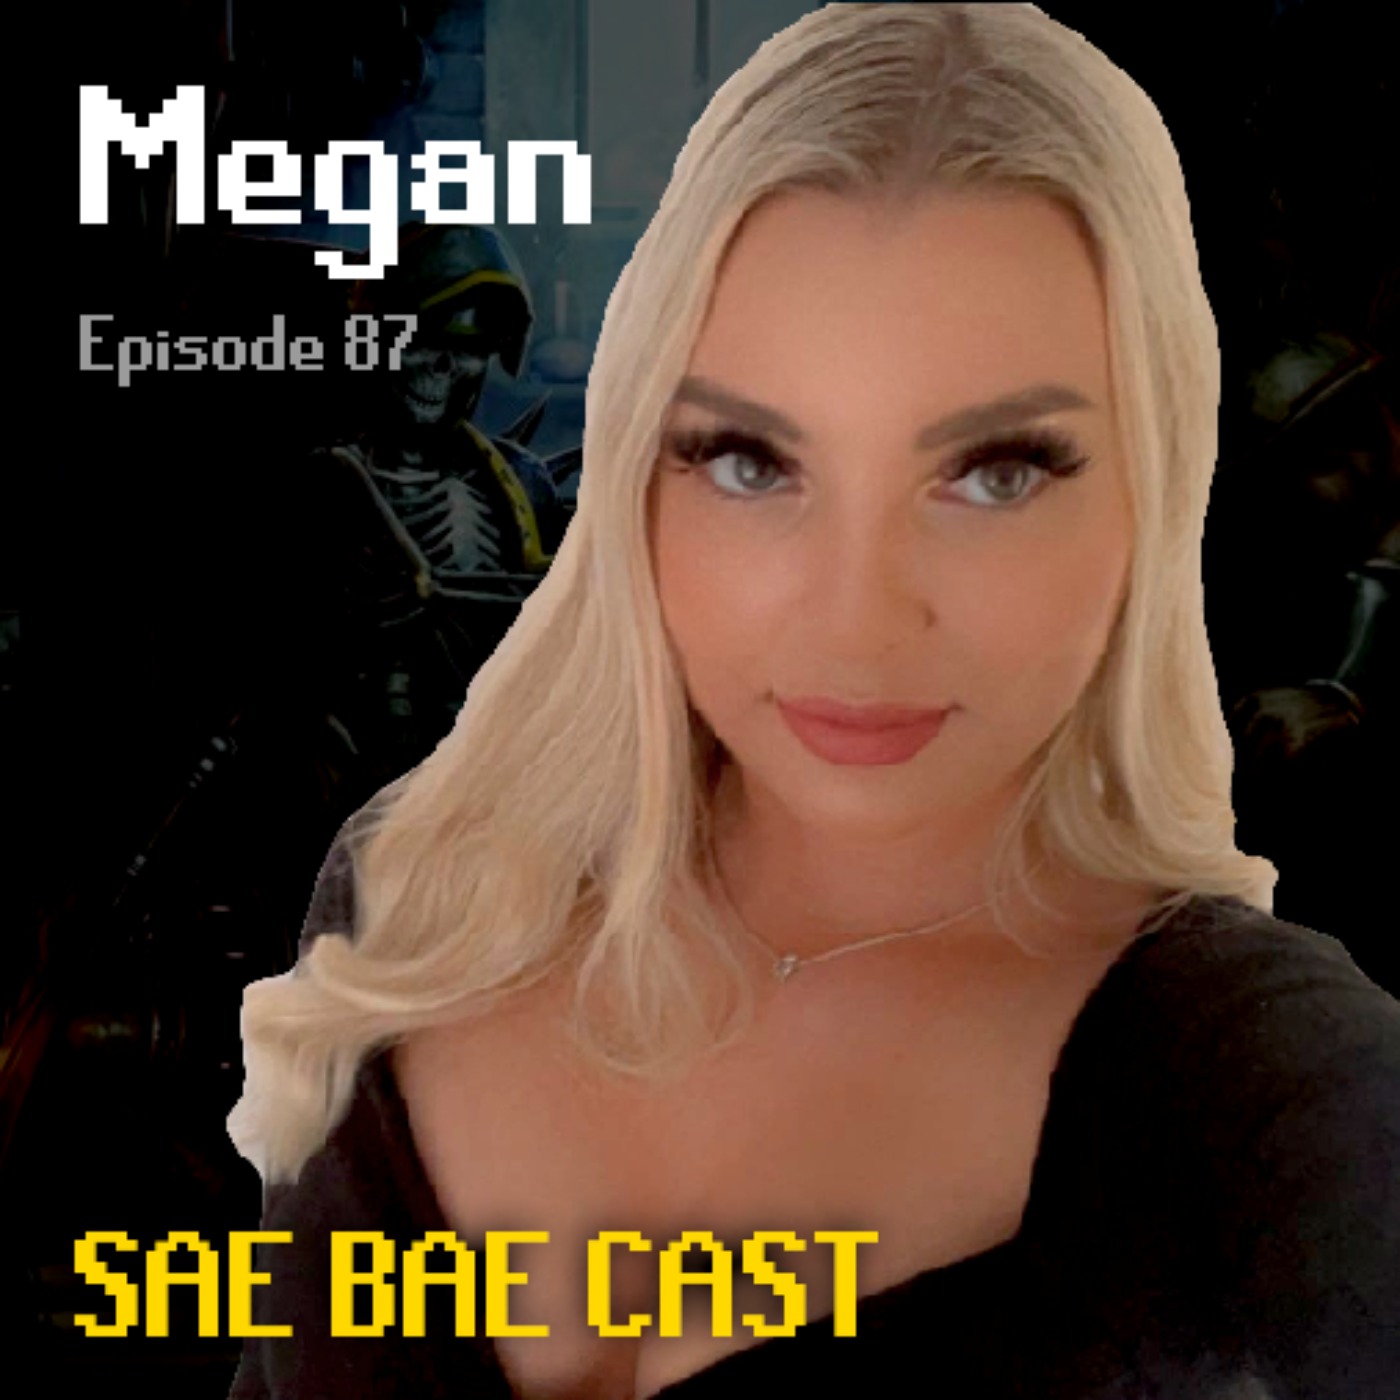 Megan - First Infernal Cape, Best Raids, Zanaris, Expanding One's Limits | Sae Bae Cast 87